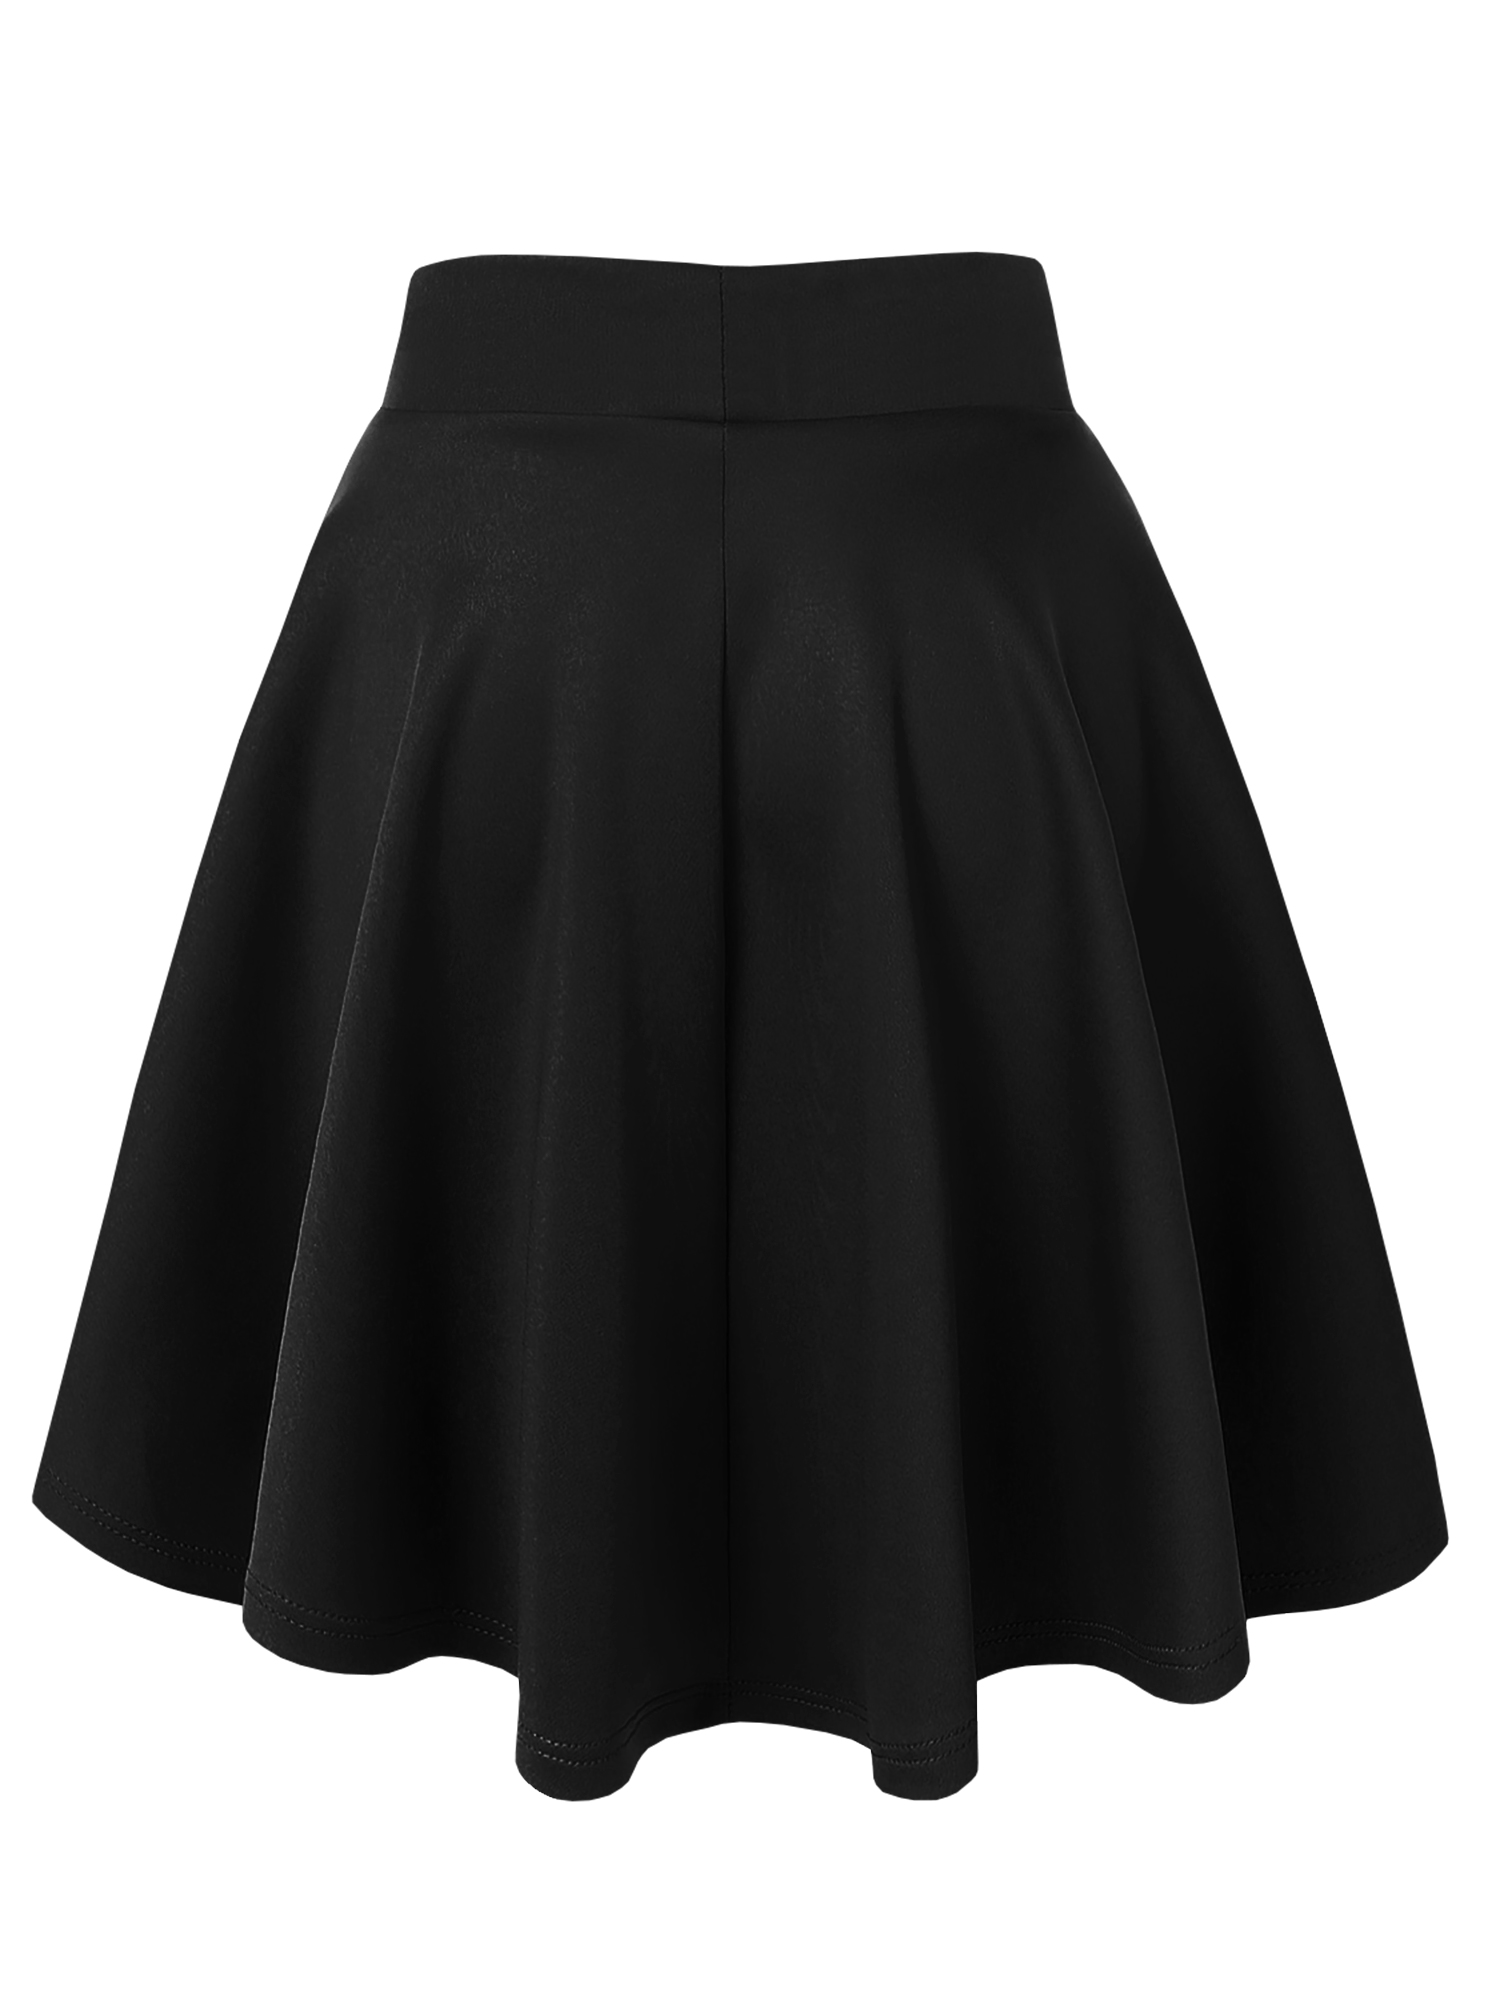 MBJ WB829 Womens Flirty Flare Skirt S BLACK - Walmart.com